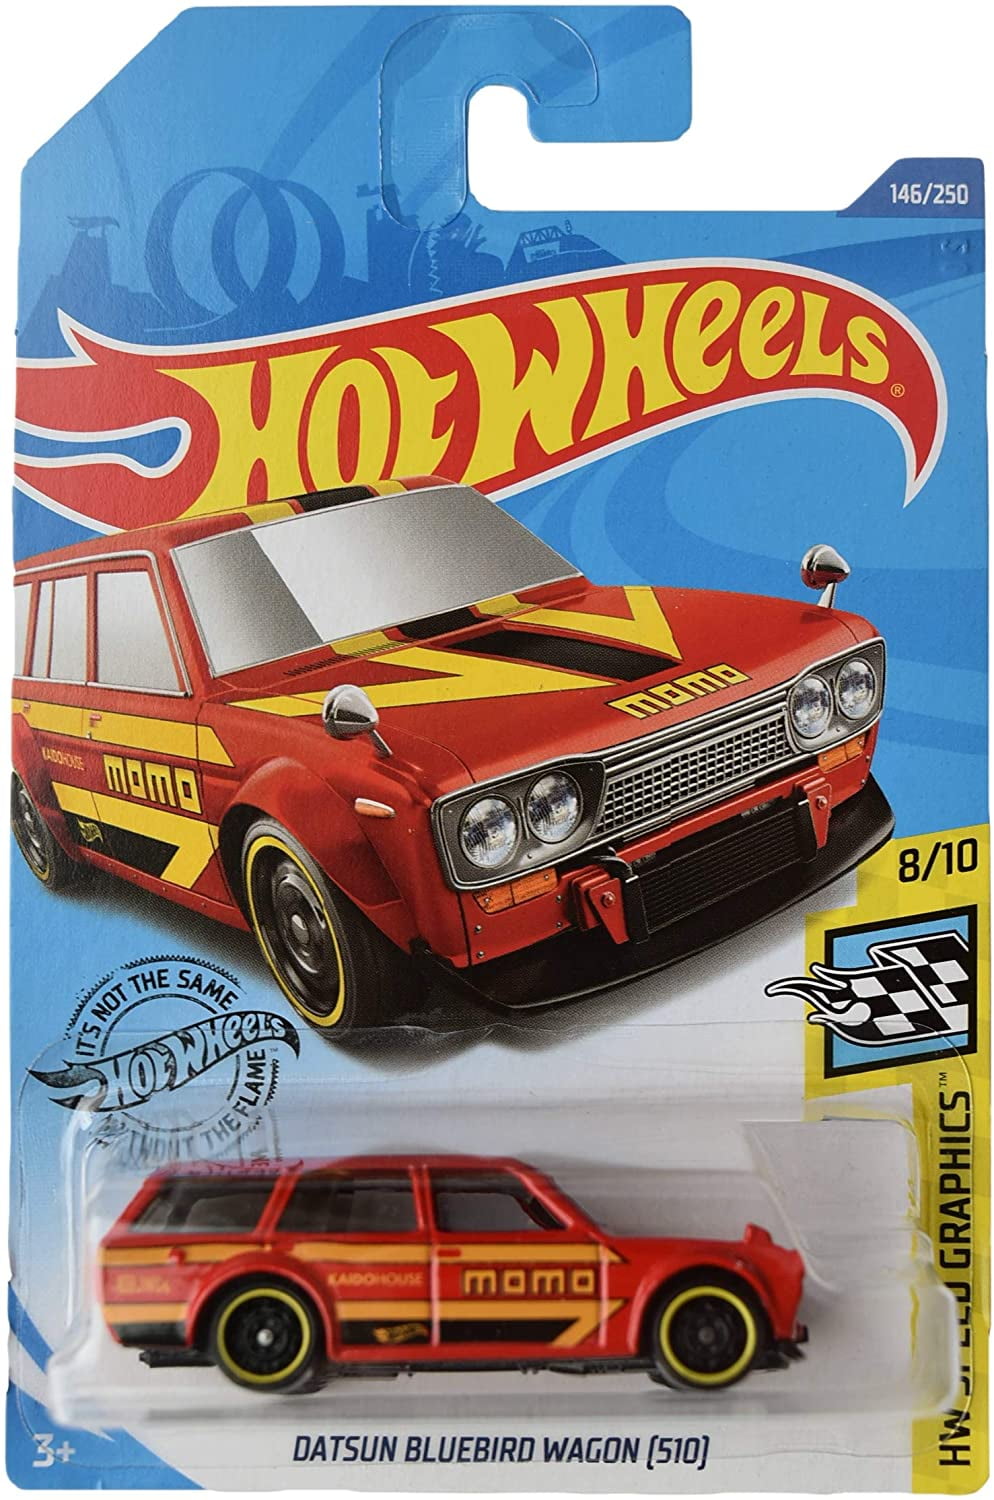 2020 Hot Wheels #146 HW Speed Graphics Datsun Bluebird Wagon 510 MOMO red 